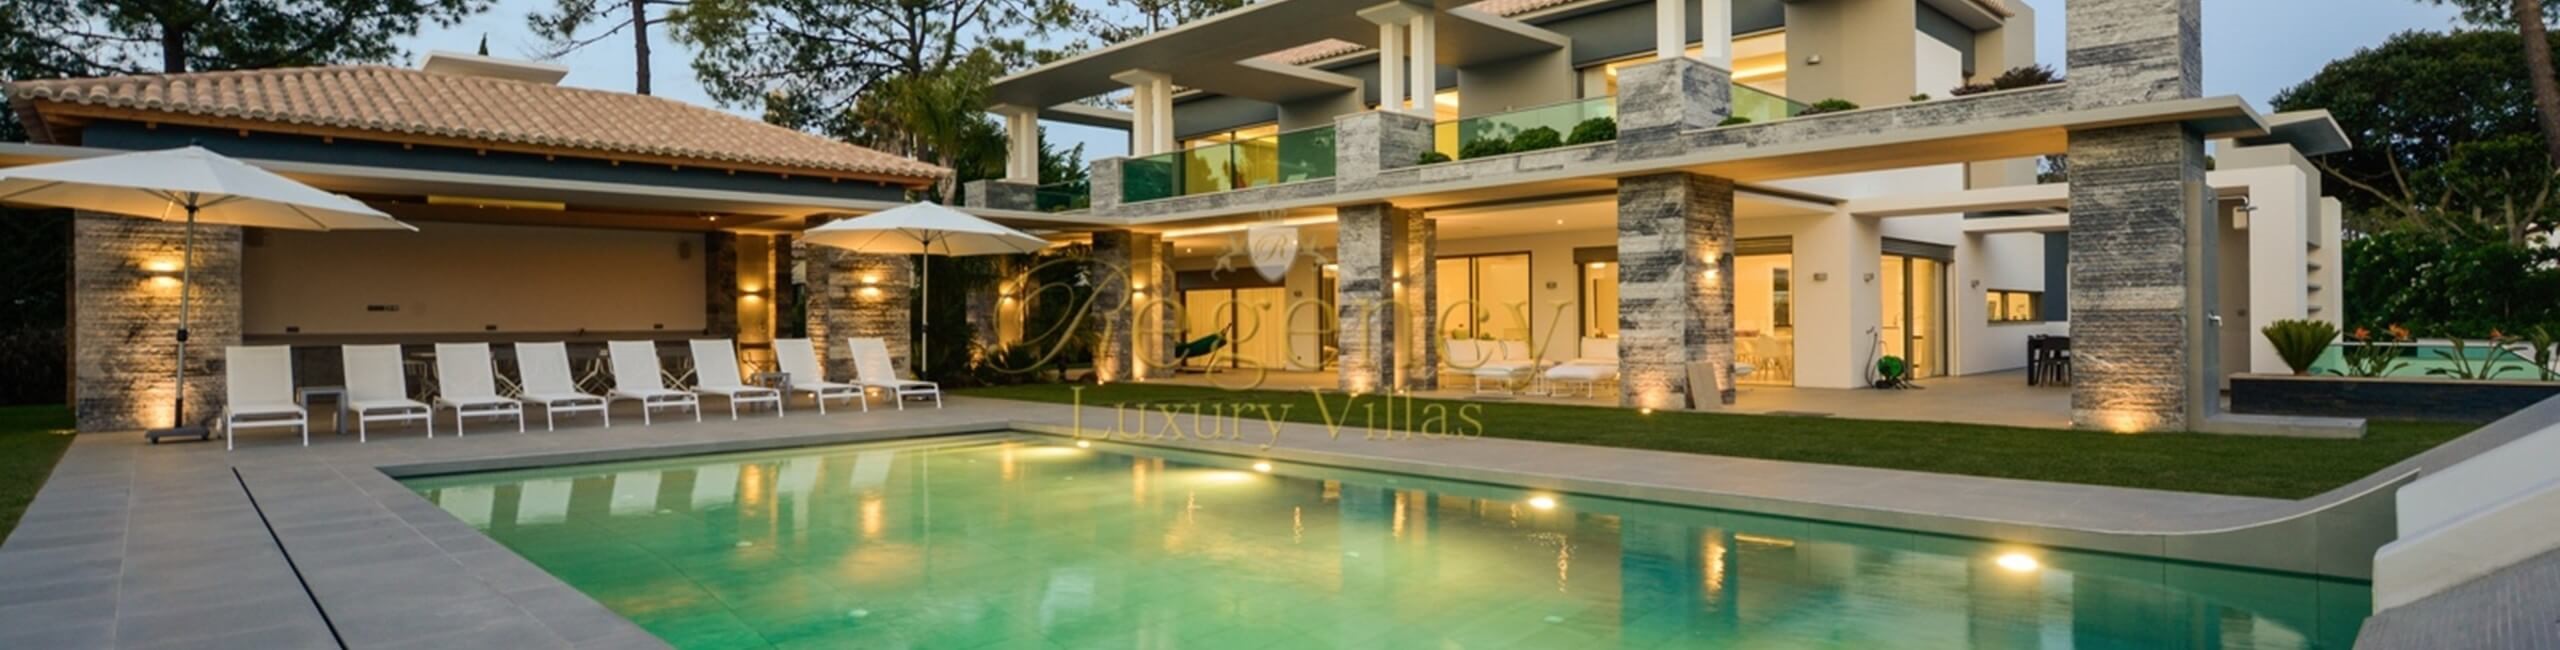 Quinta Do Lago Luxury Villas To Rent